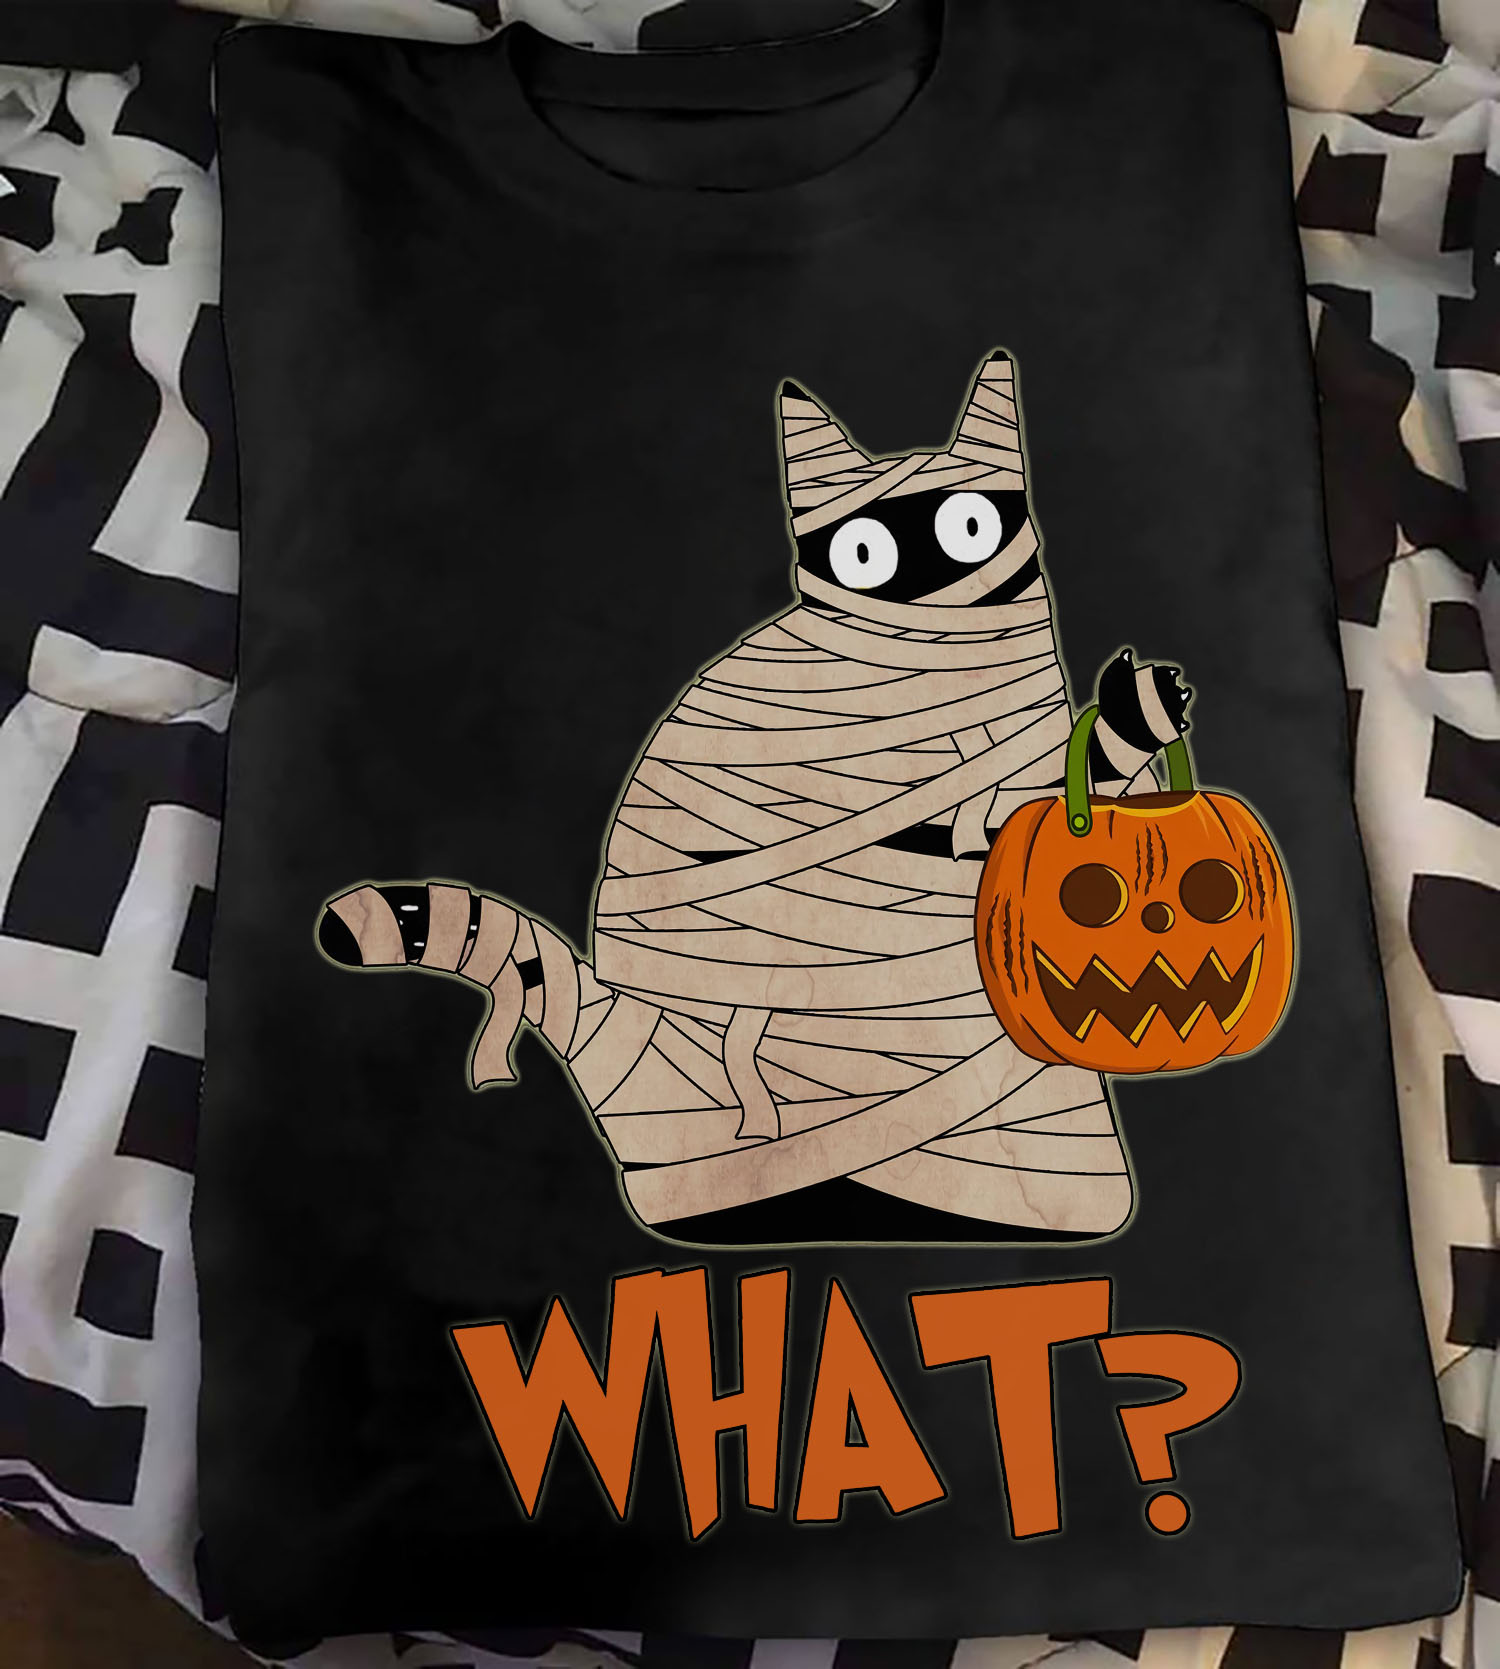 Black Cat Mummy, Halloween Costume - What? Pumpkin halloween